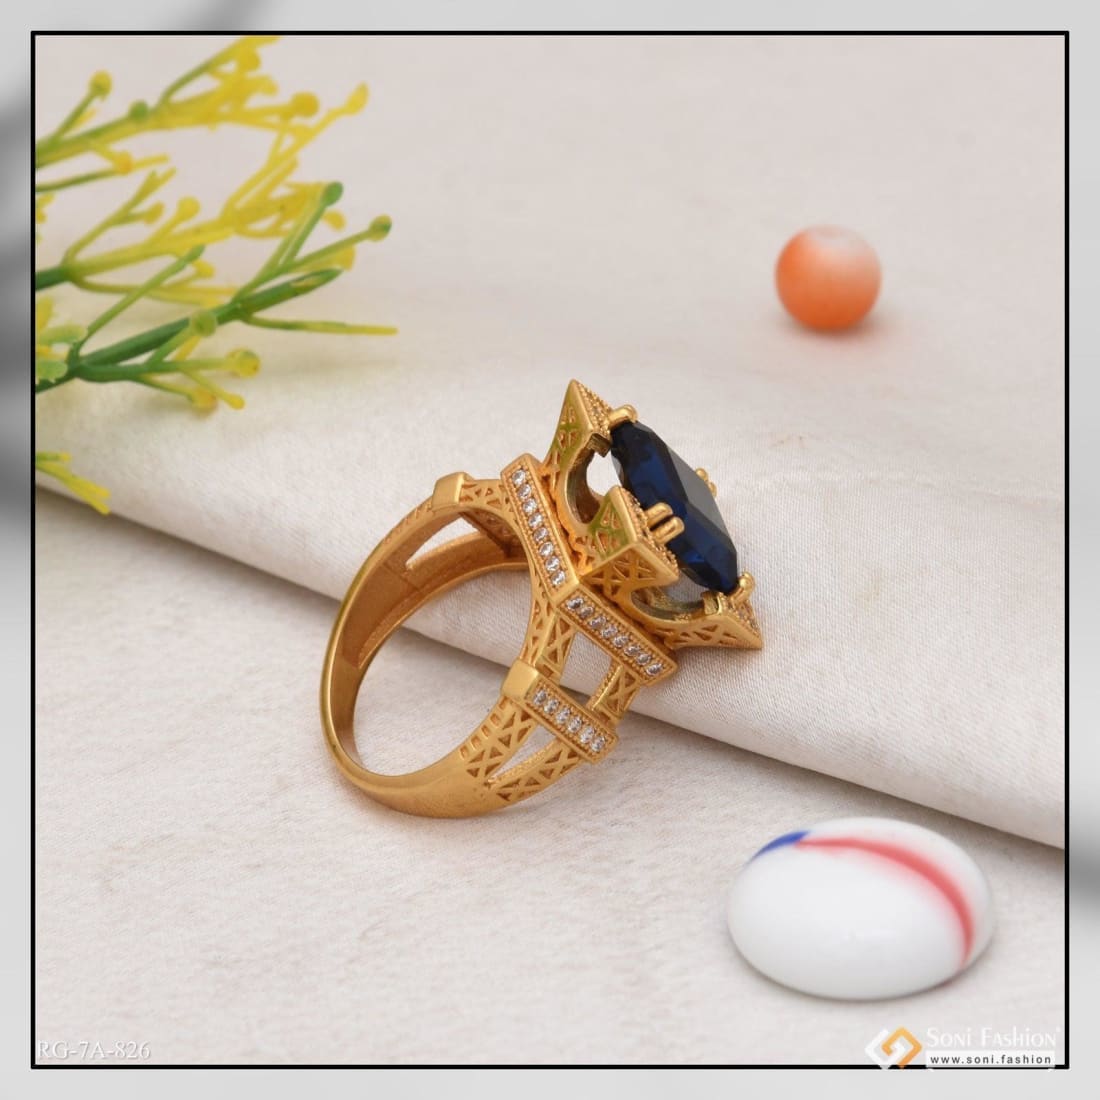 The Yana Ring | BlueStone.com